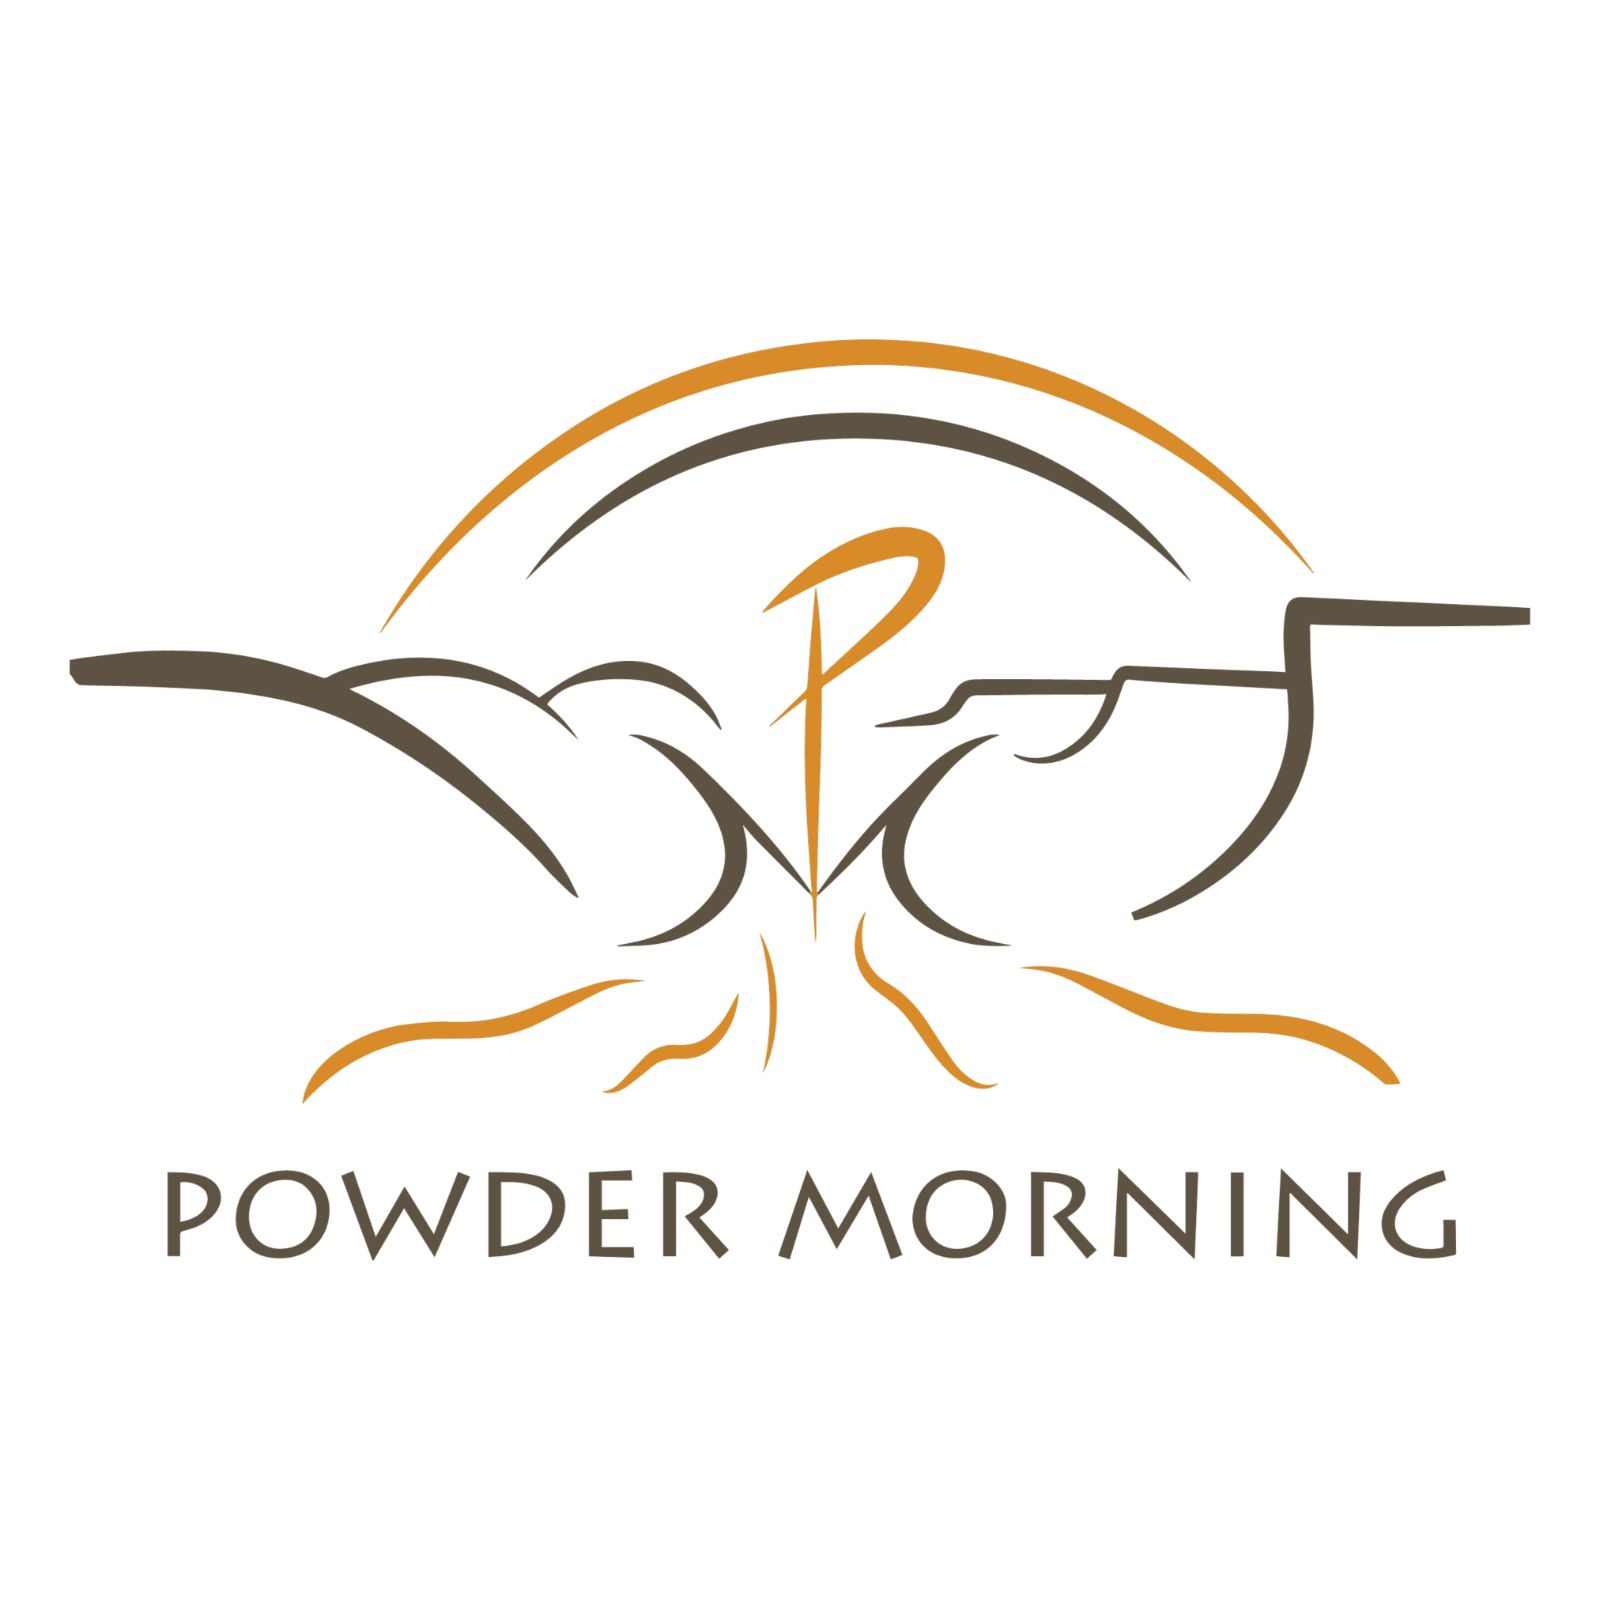 Powder Morning Hunting Company